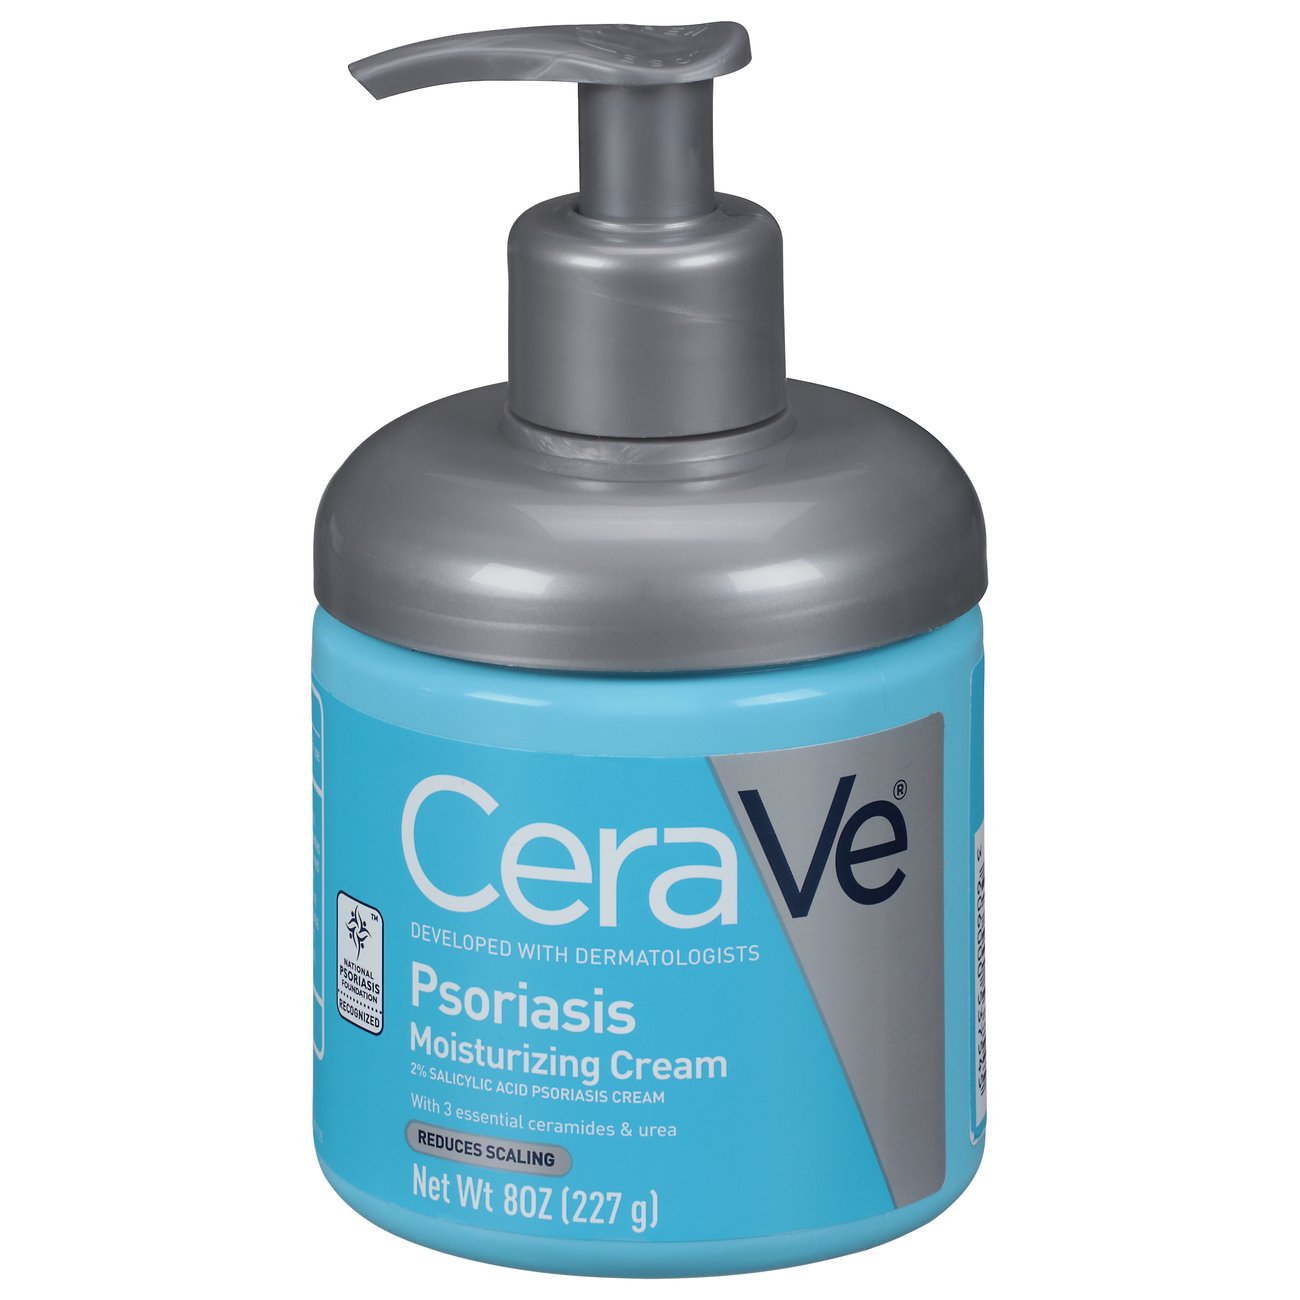 psoriasis moisturizing cream cerave